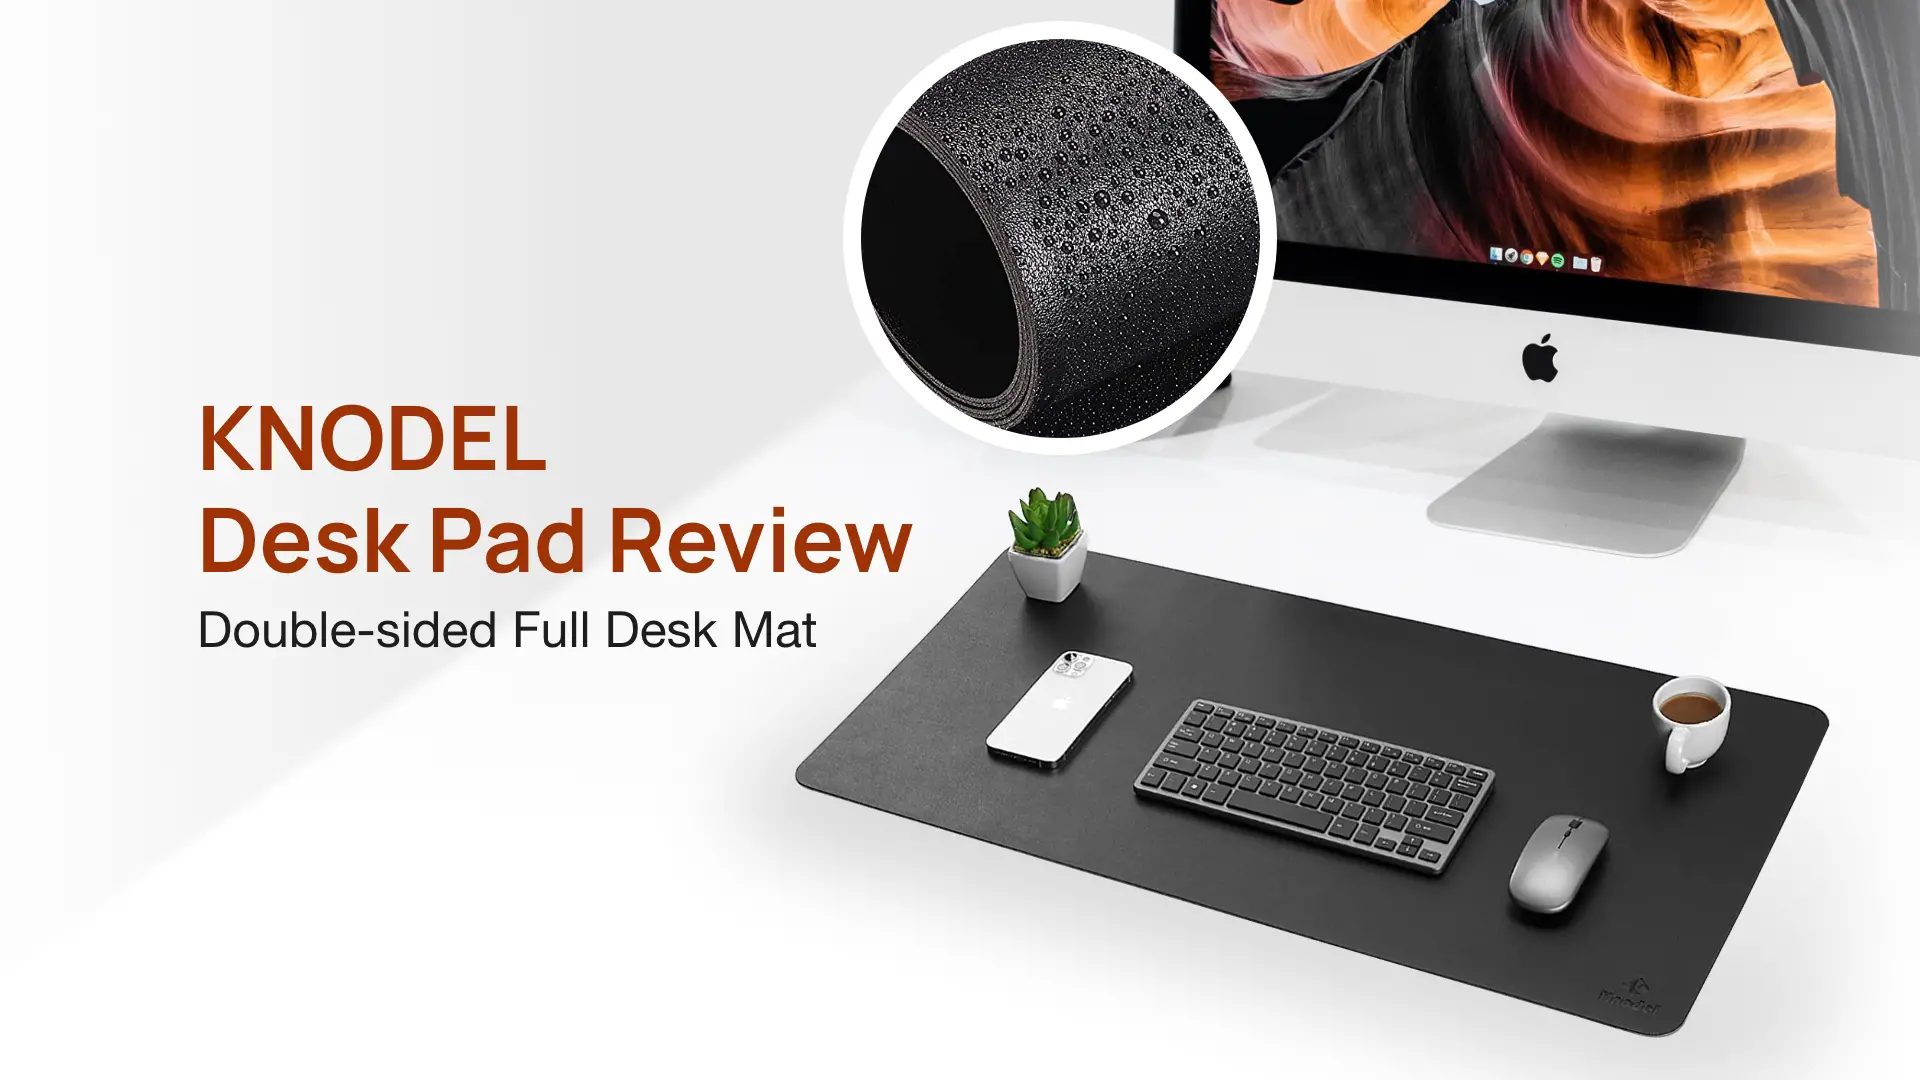 KNODEL Desk Pad Review - A Full Desk Mat